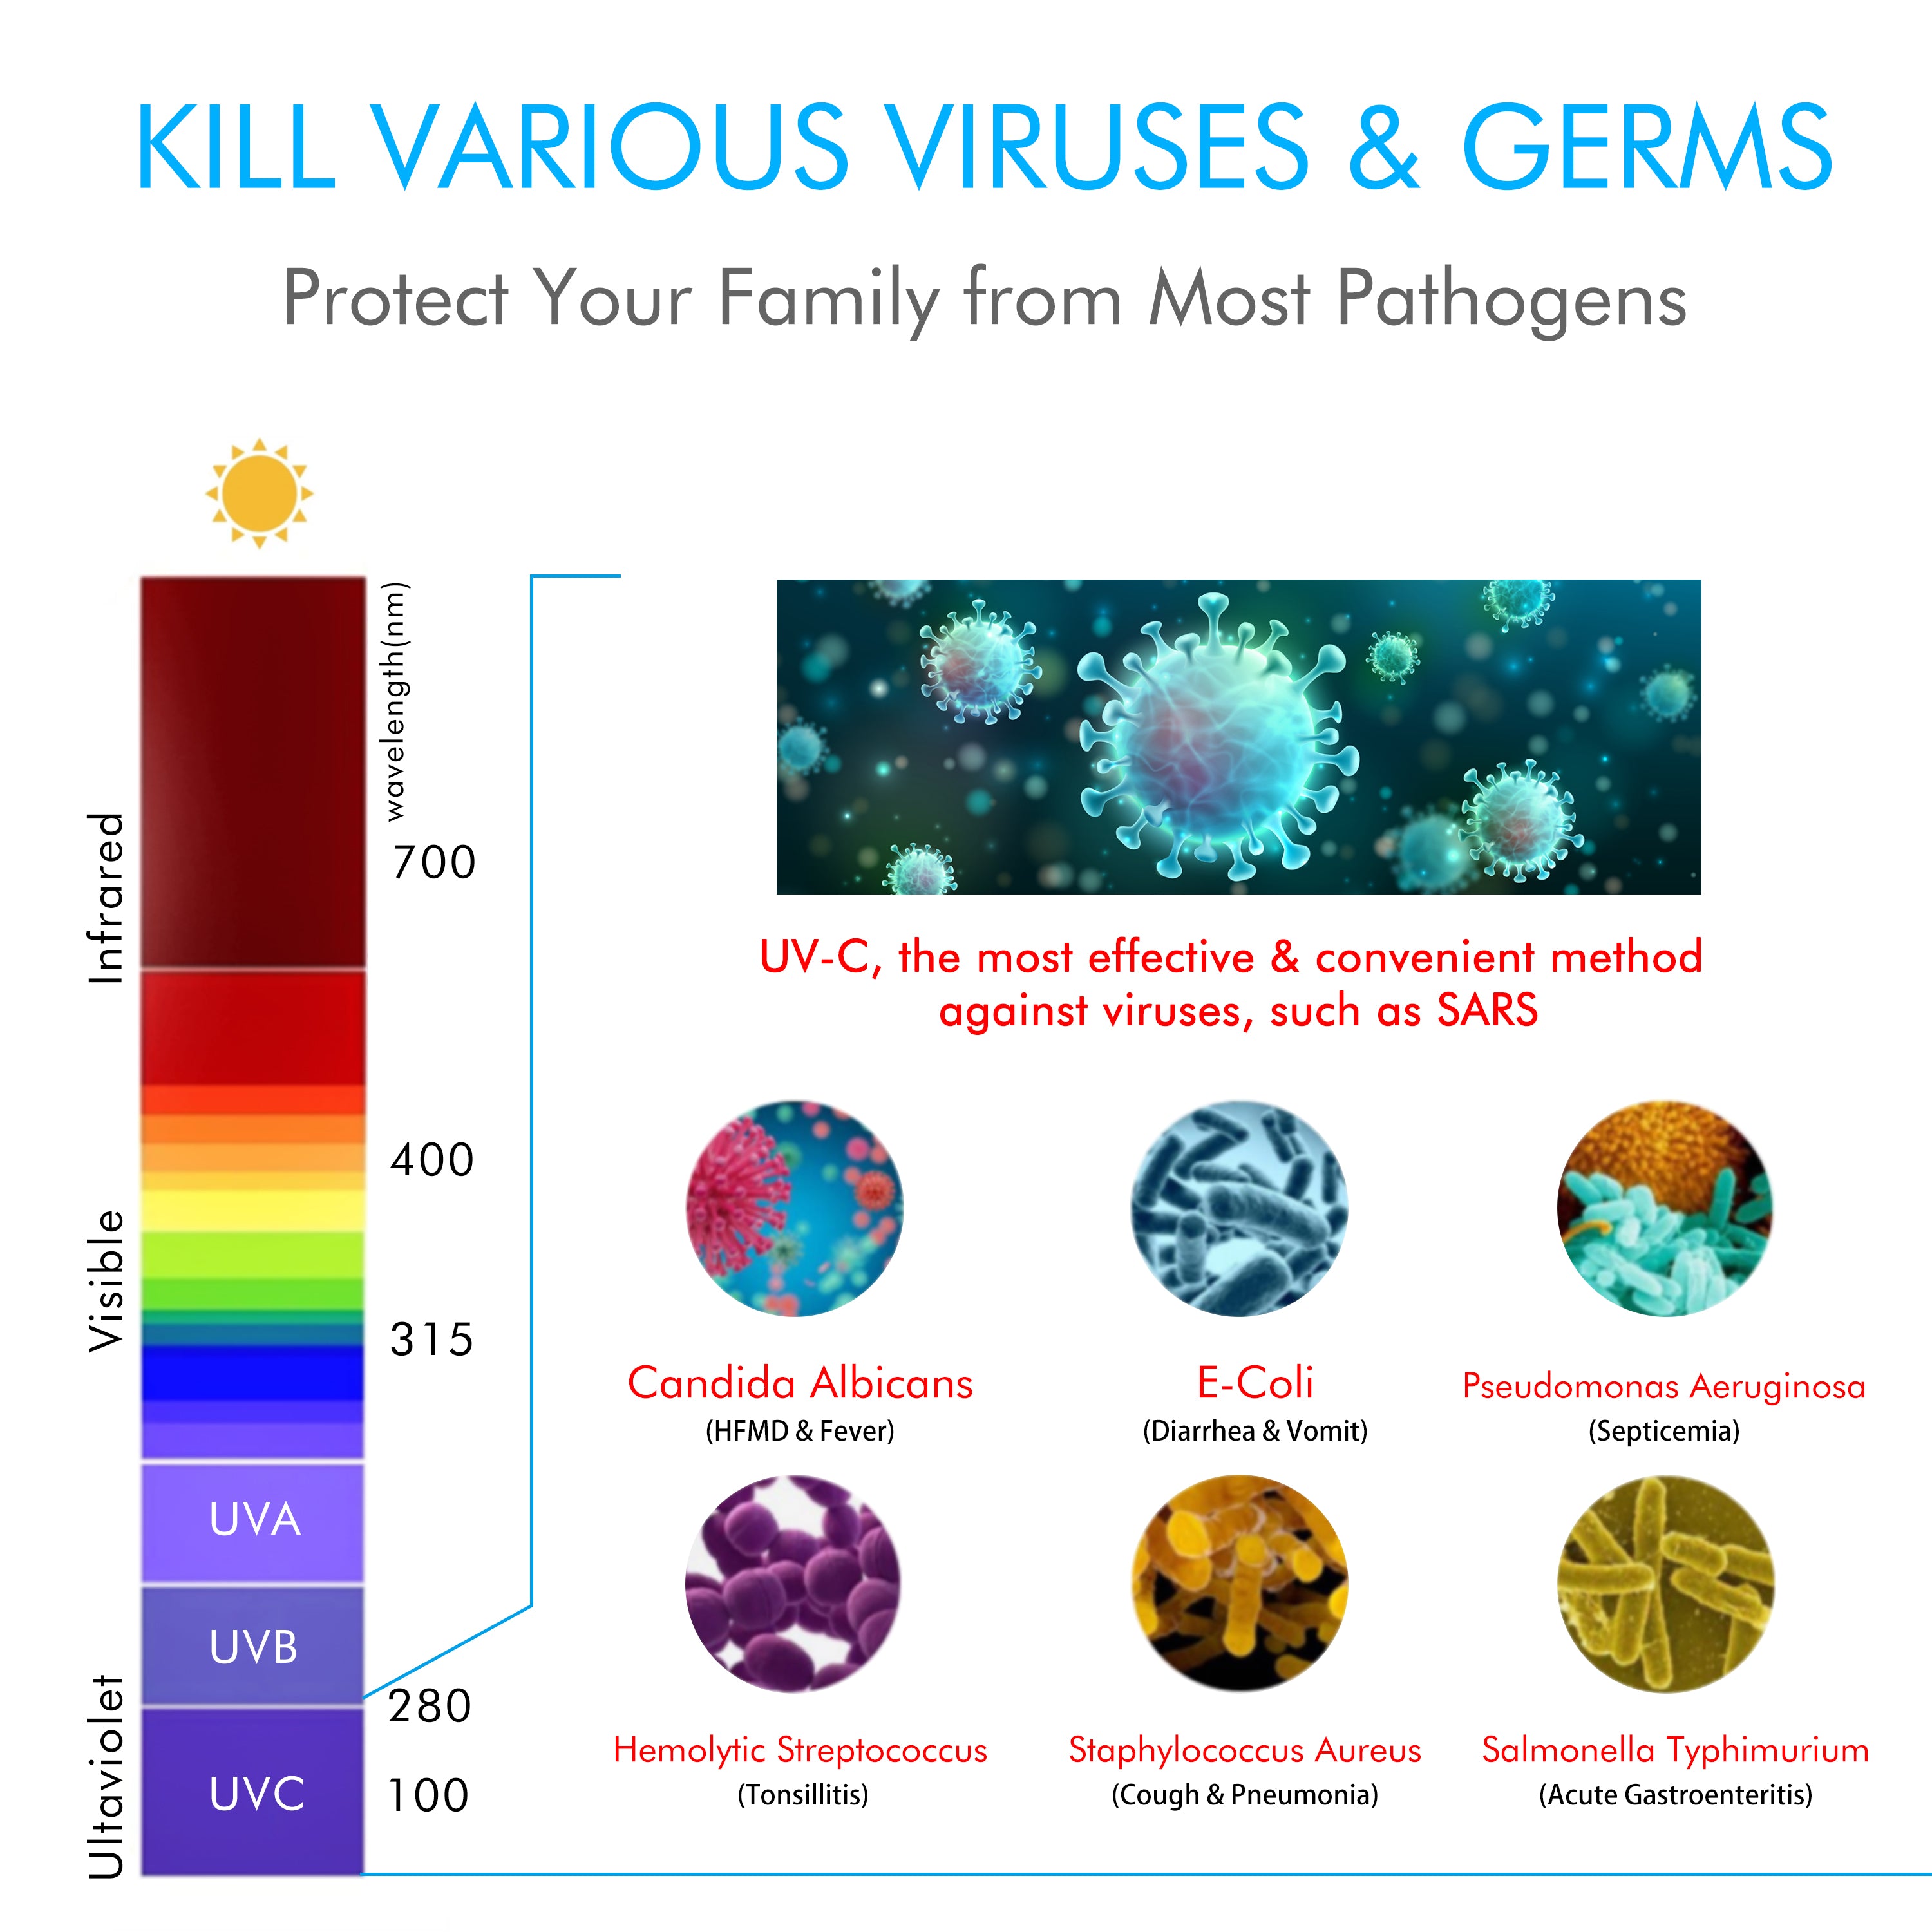 does uvc light kill germs